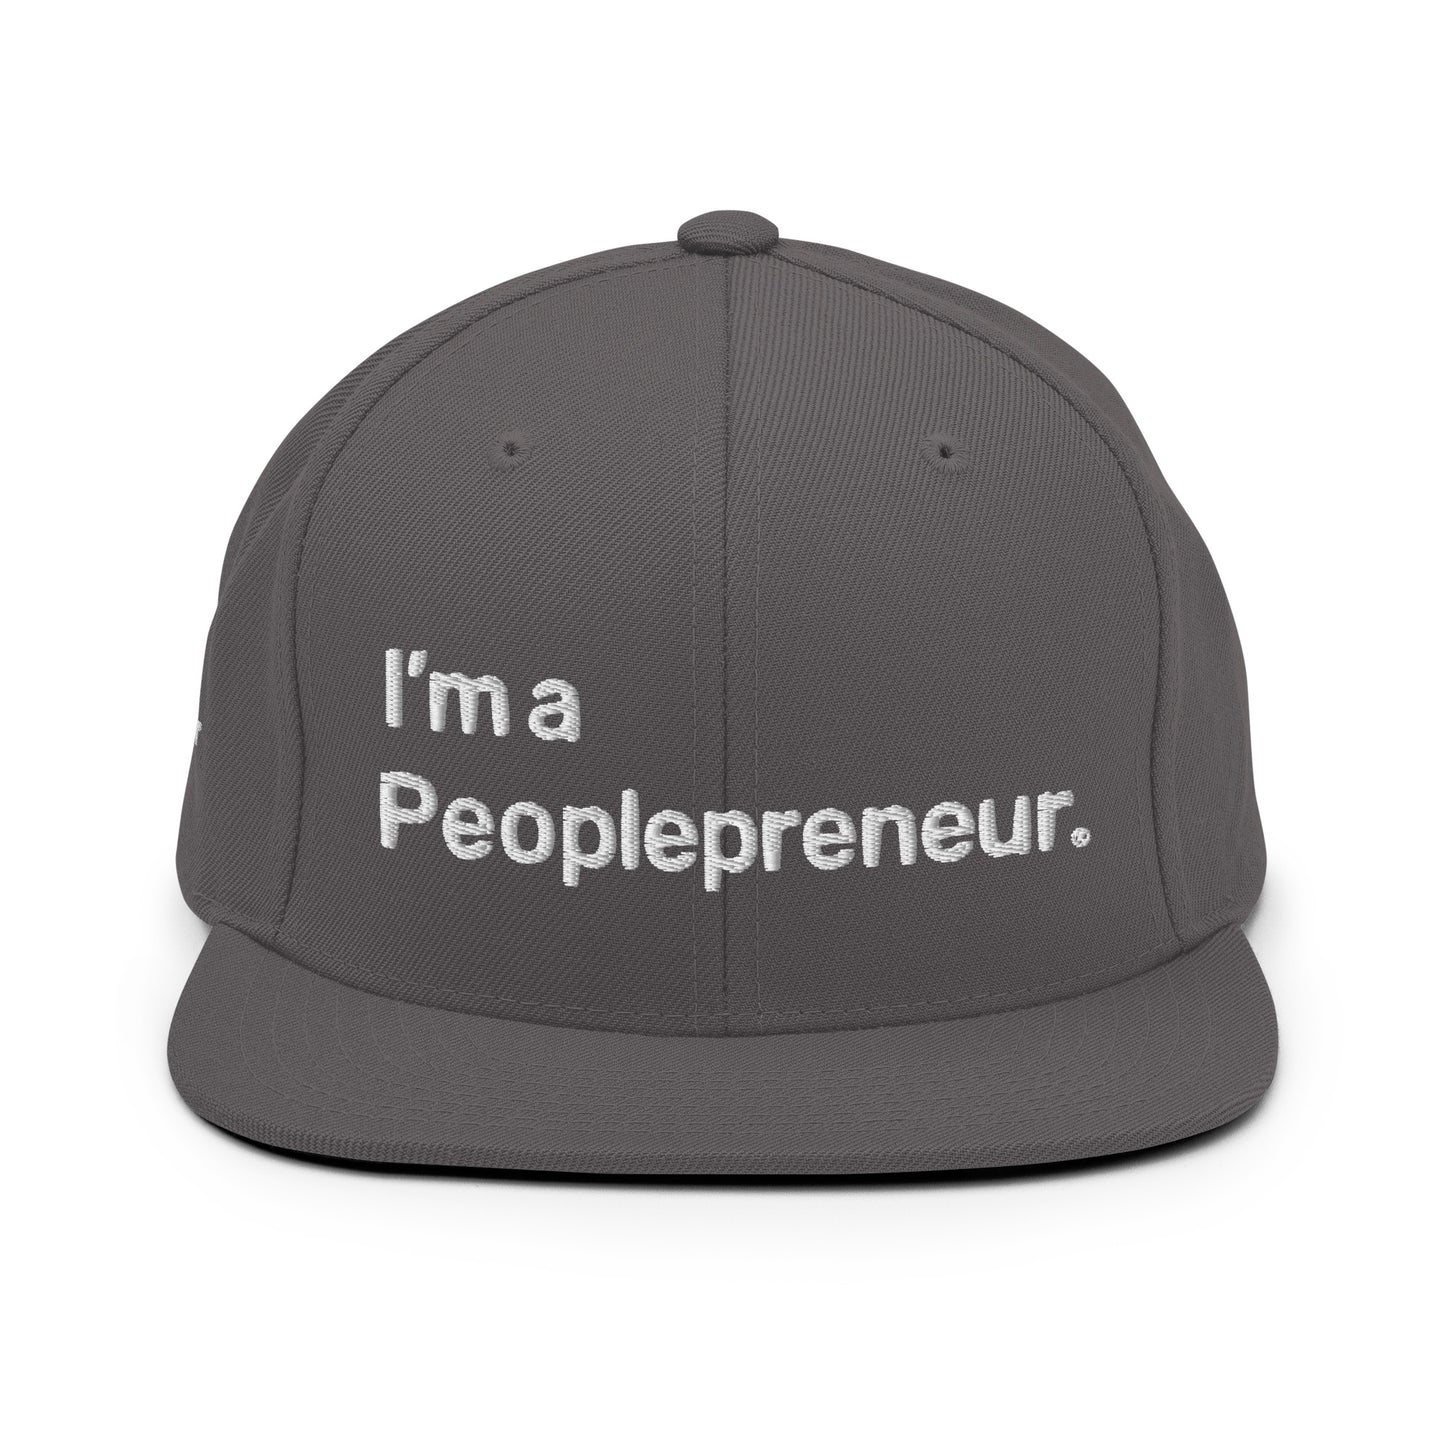 Peoplepreneur® - I'm a Peoplepreneur Classic Snapback